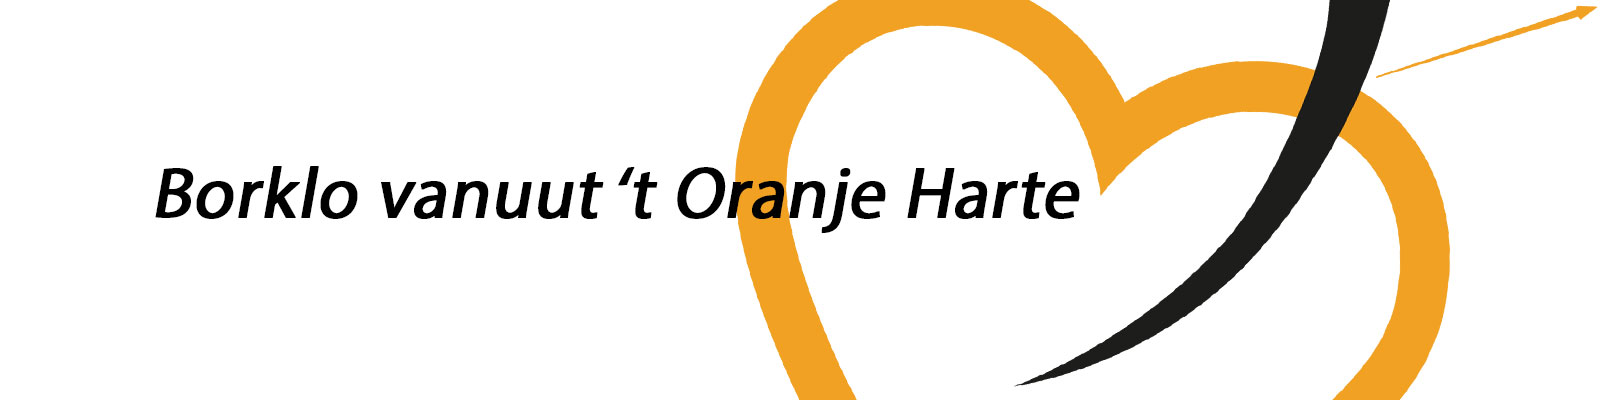 banner oranjecongres